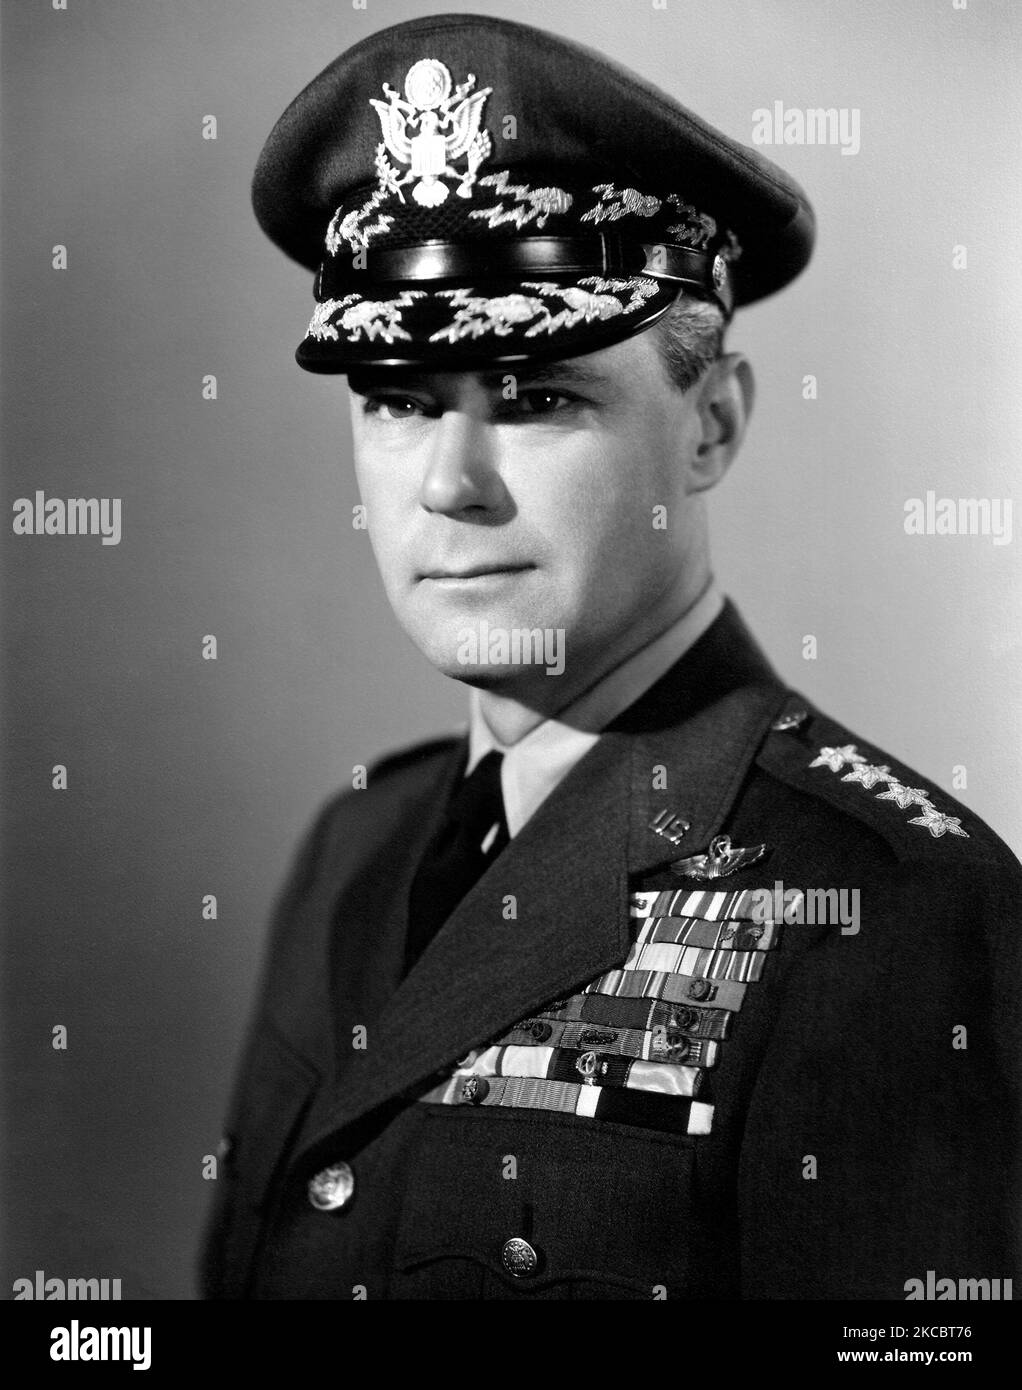 Portrait of Hoyt Vamdenberg, a U.S. Air Force General. Stock Photo